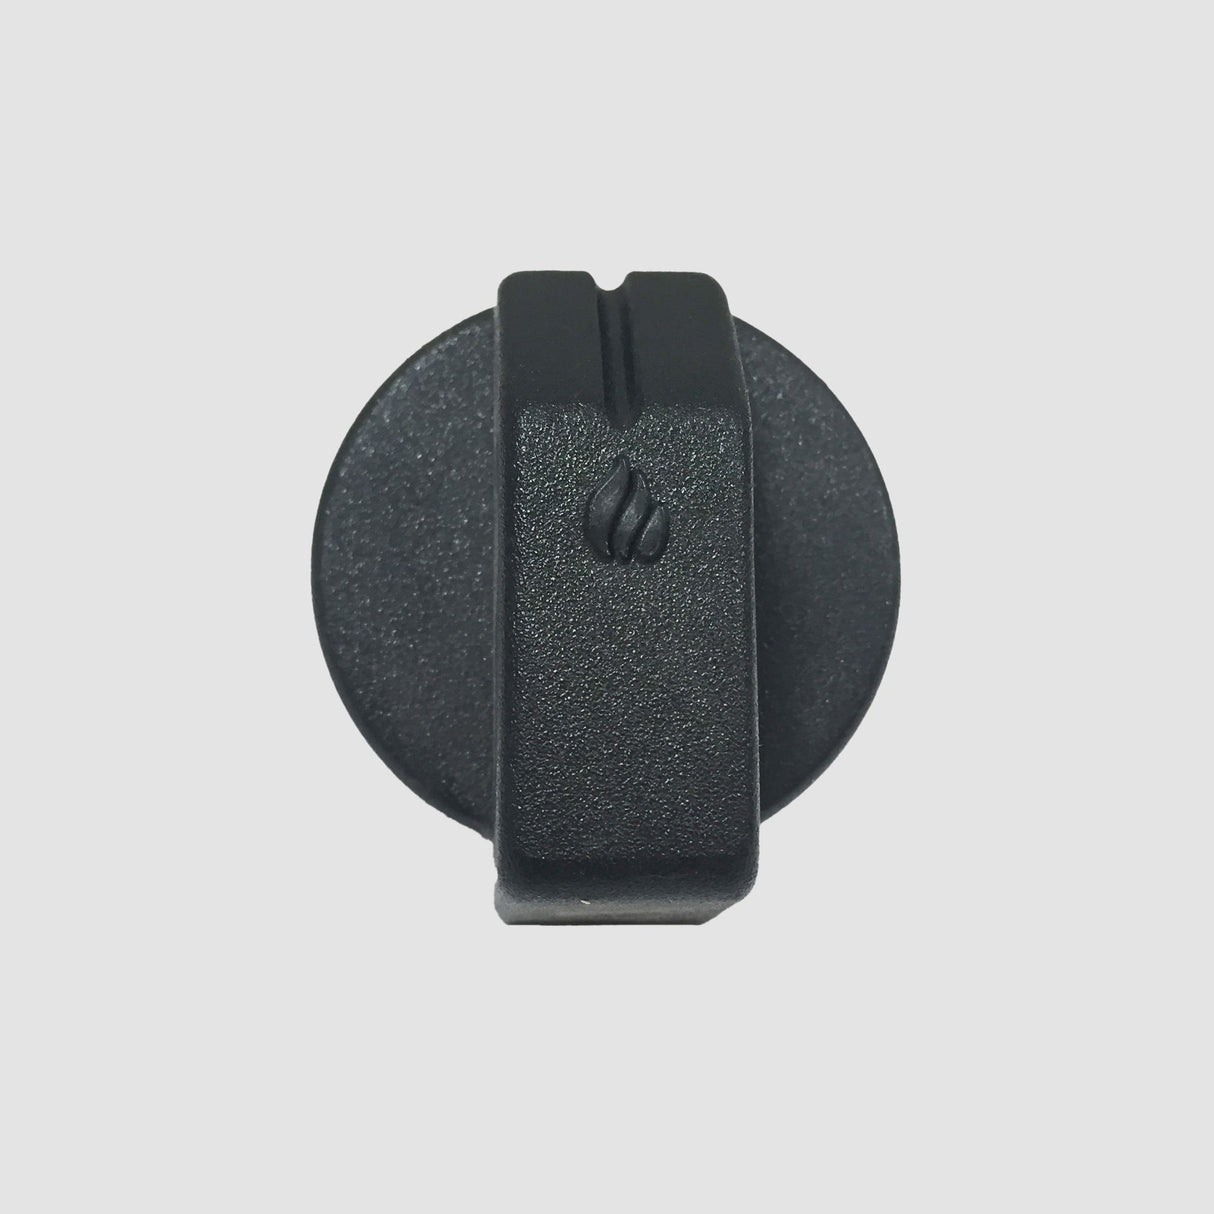 The GM-KV Valve Black Plastic Knob on a grey background